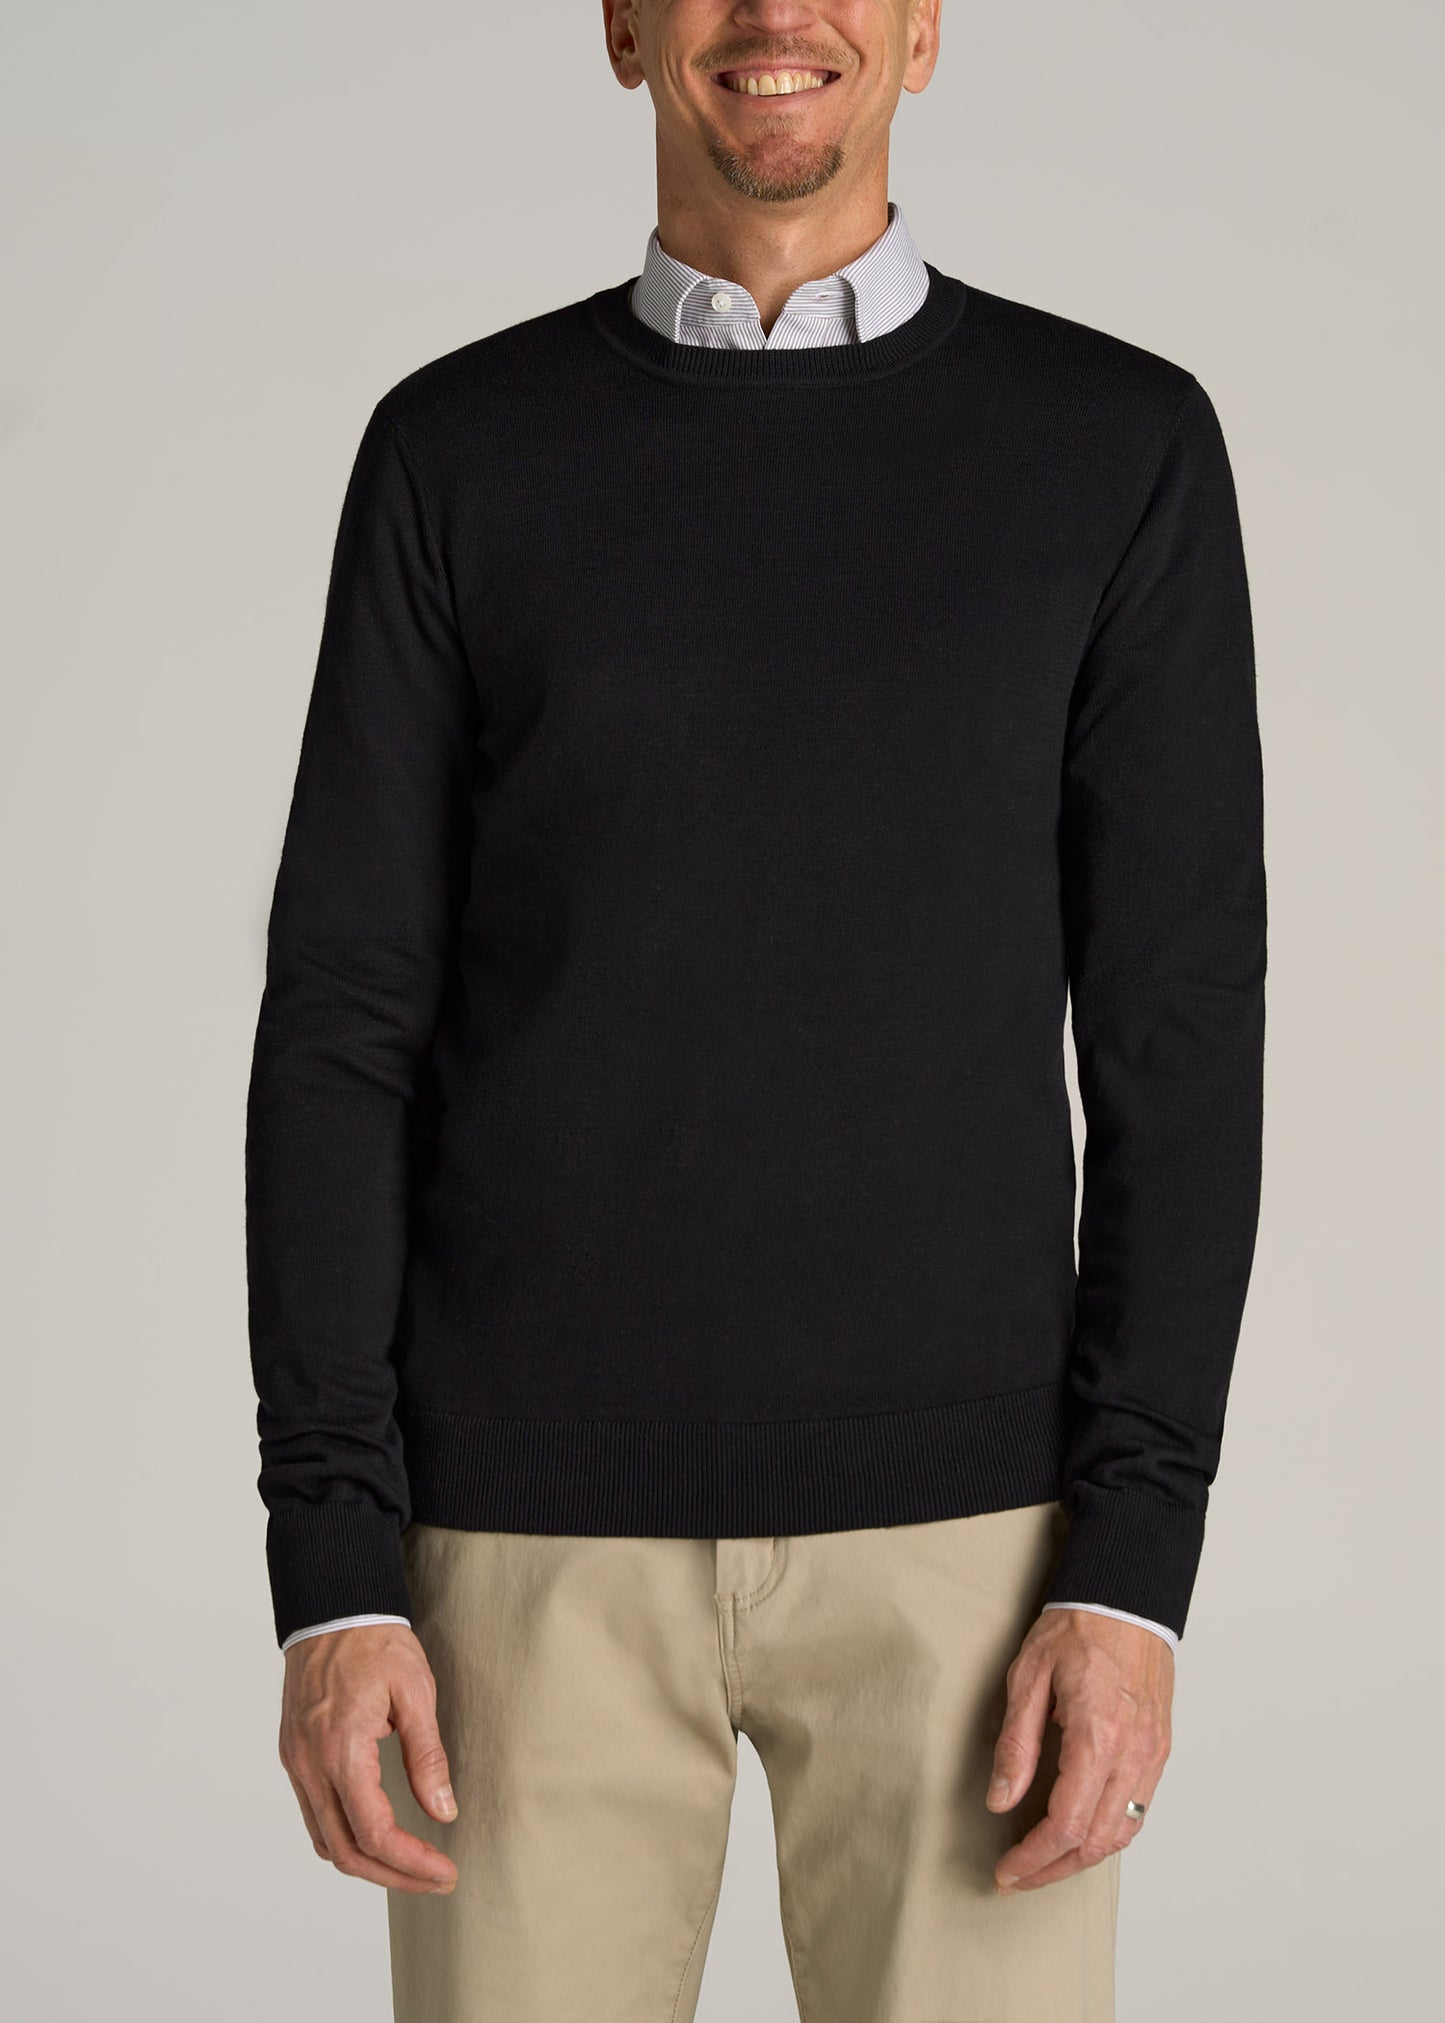       American-Tall-Men-Everyday-Crewneck-Sweater-Black-front